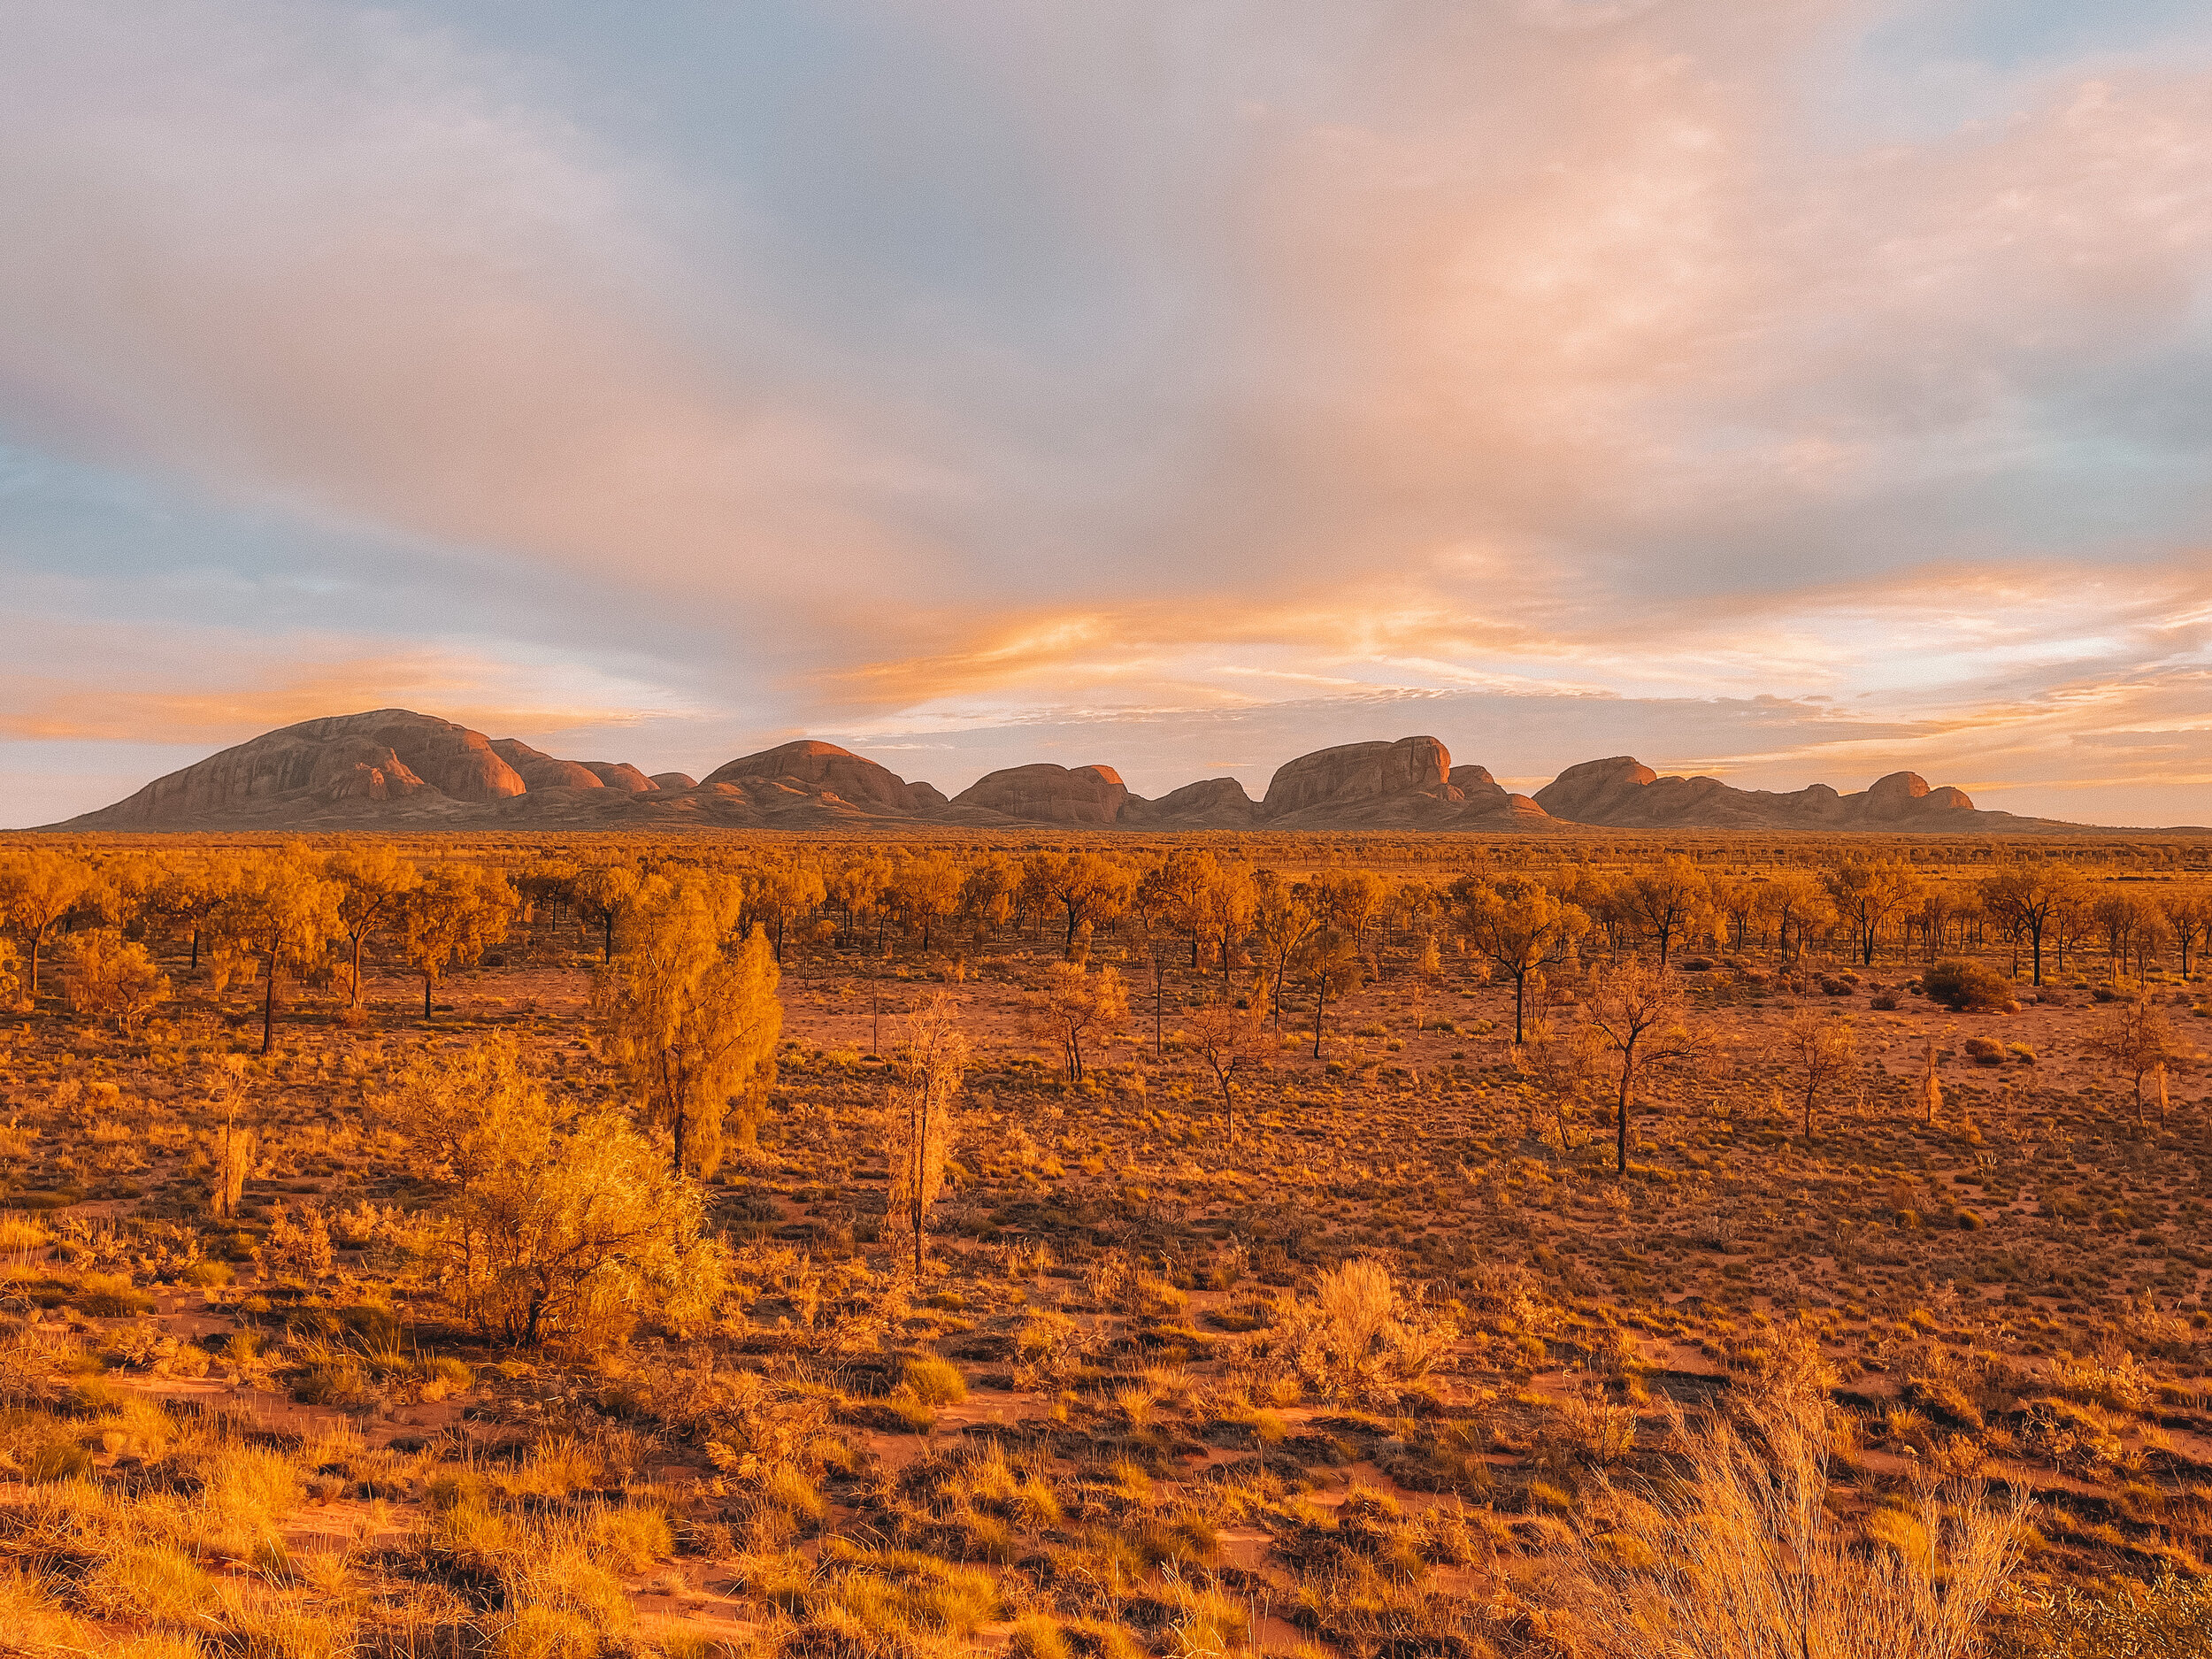 Sunrise at Kata Tjuta Dunes Viewing Area - Uluru - Northern Territory - Australia